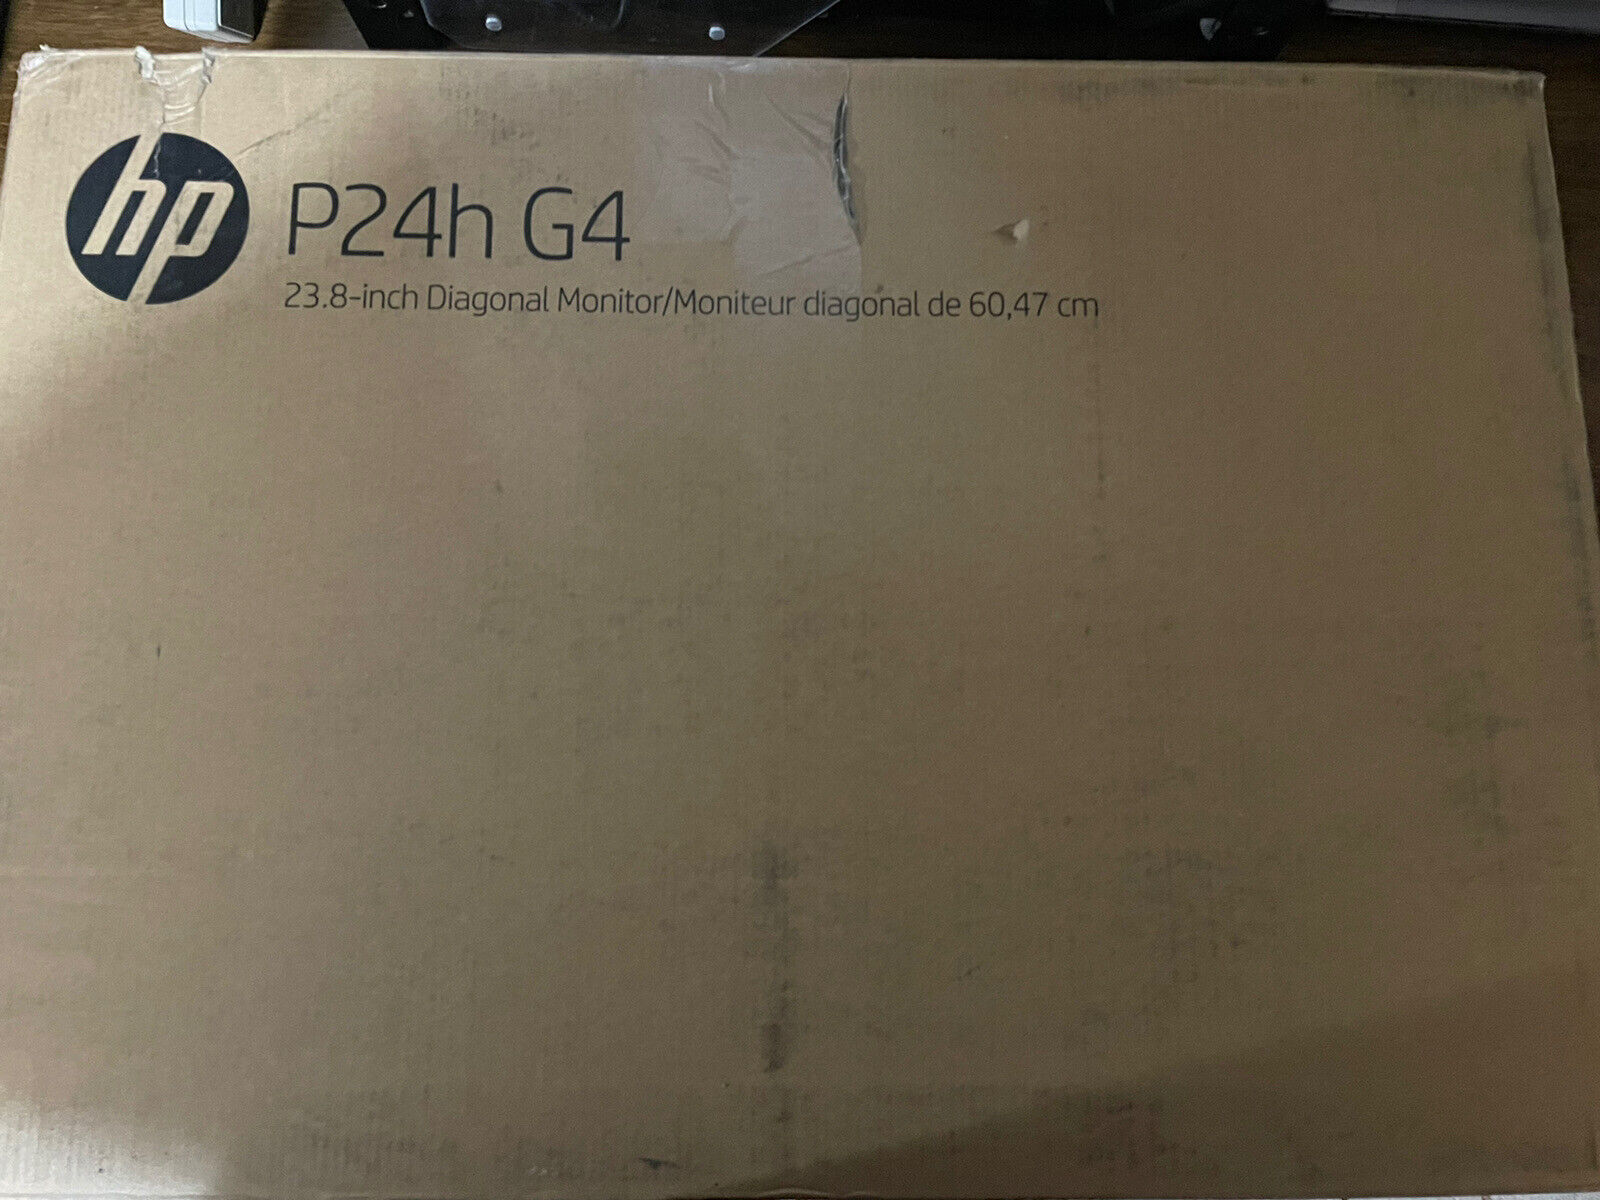 HP P24h G4 23.8